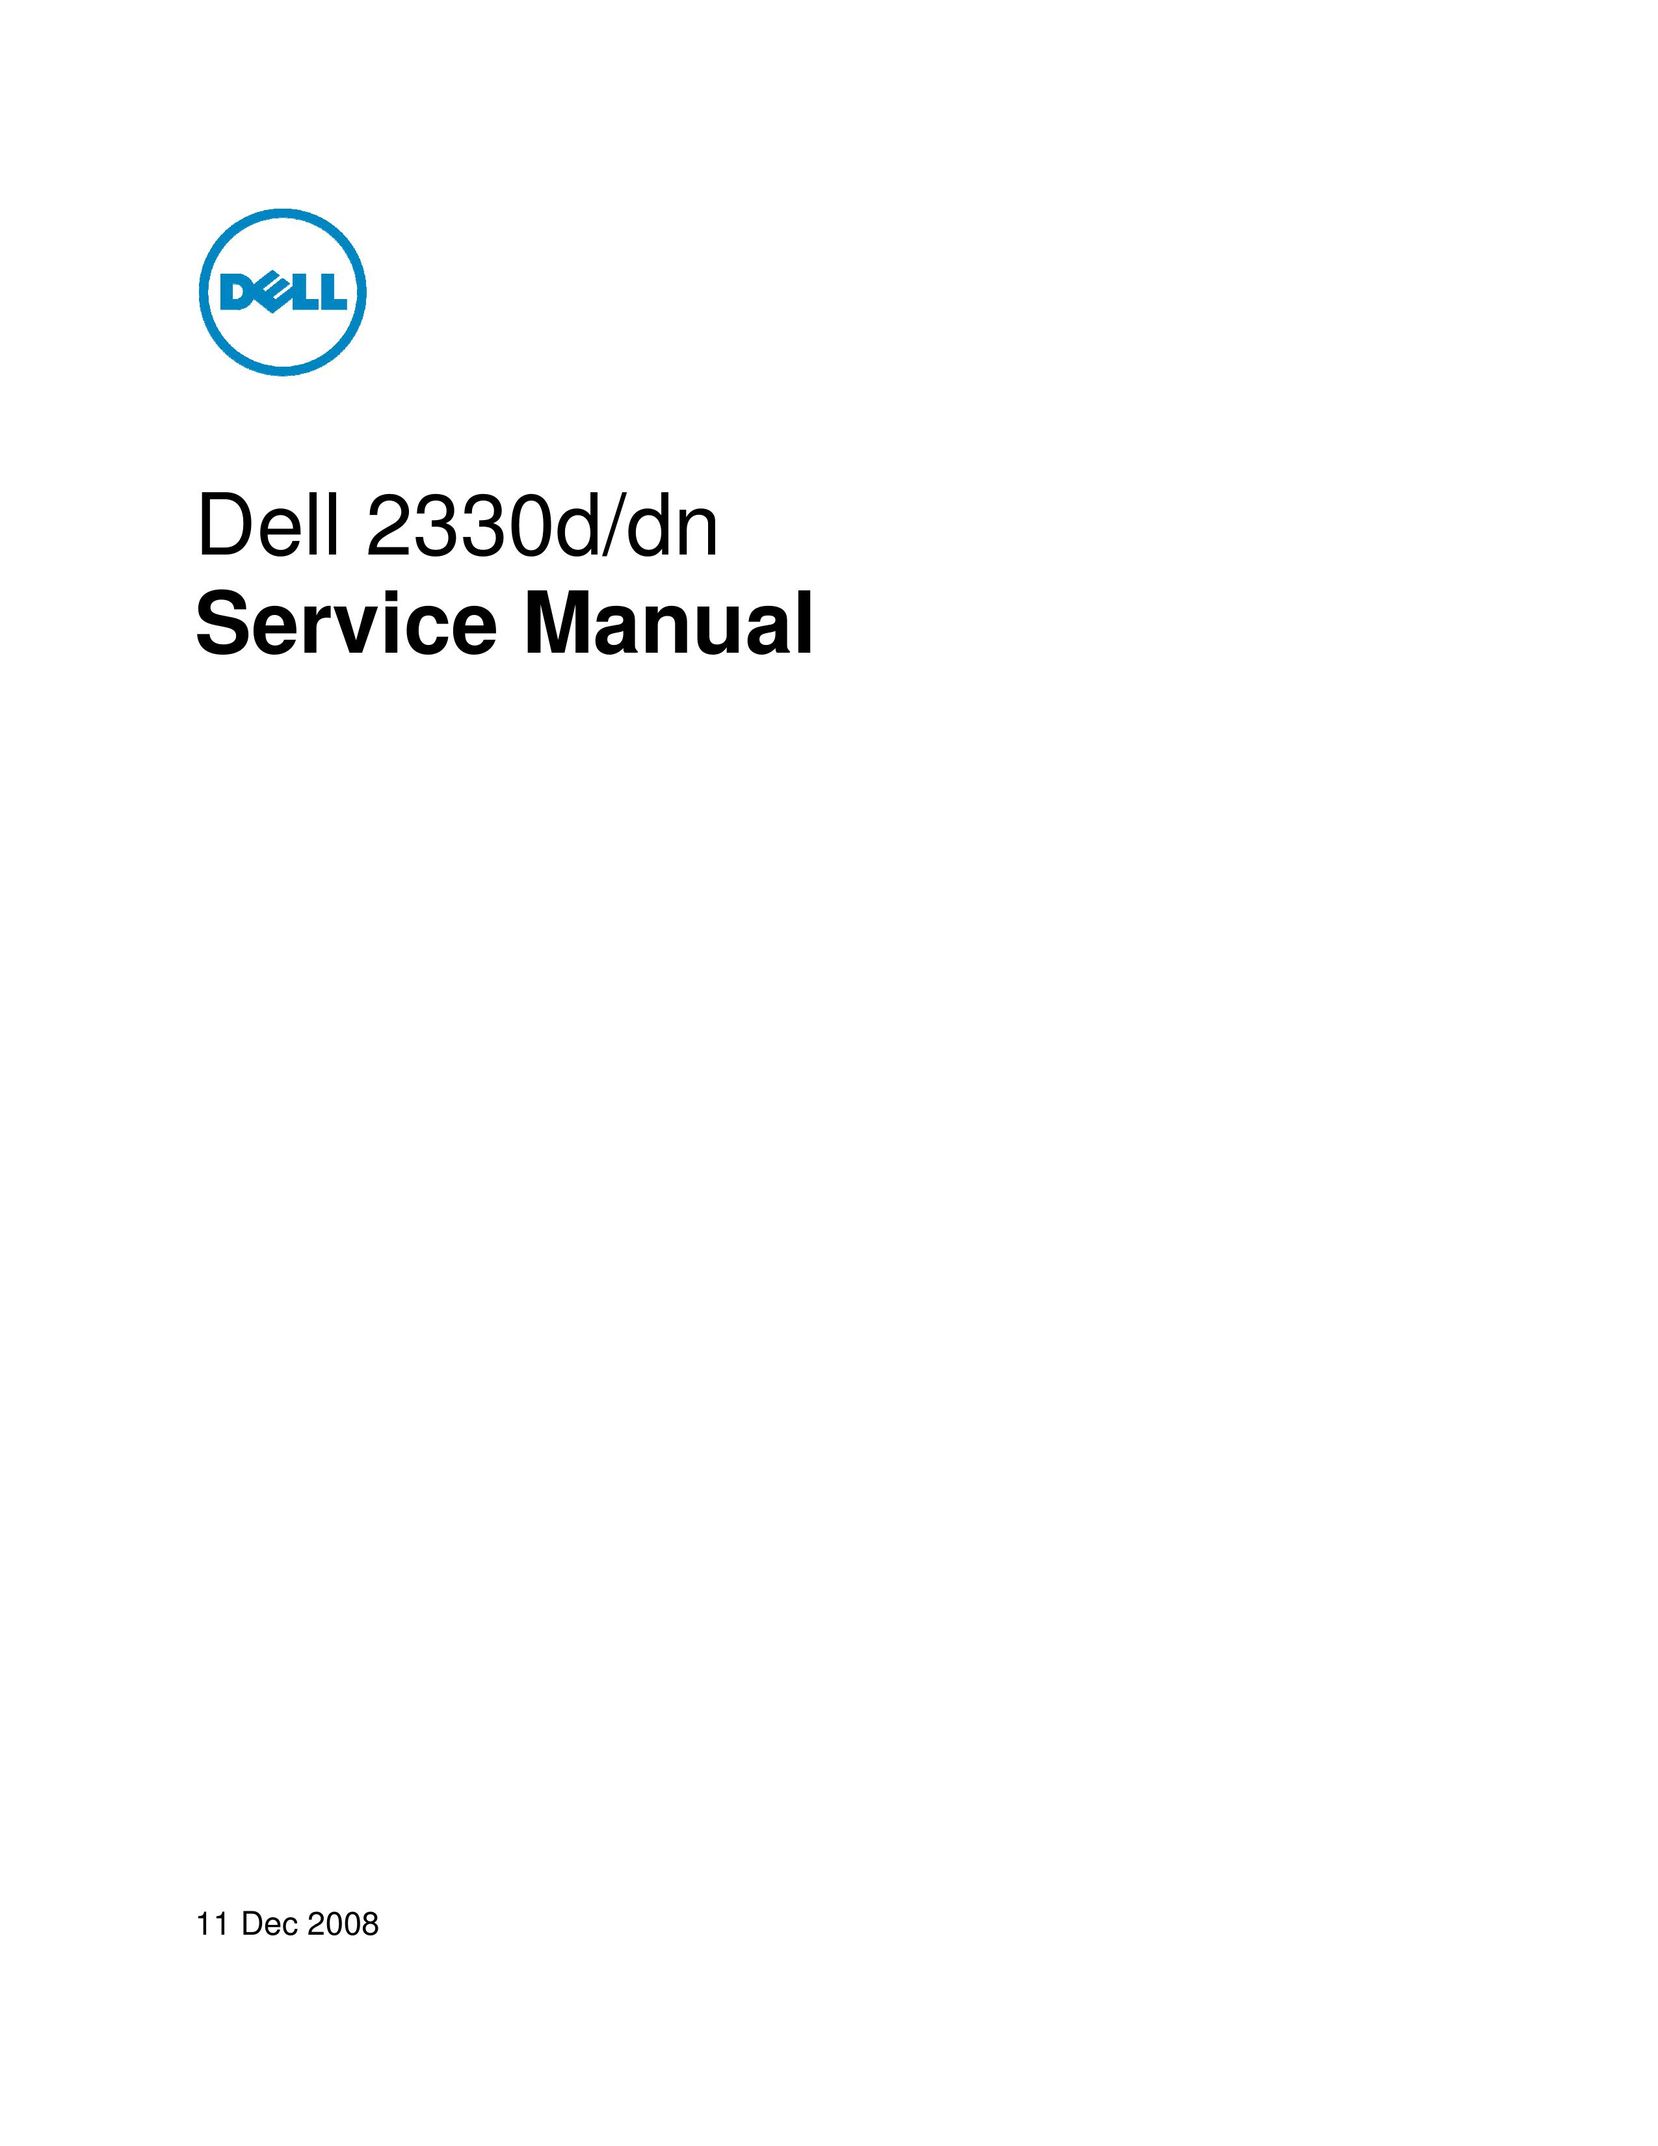 Dell 2330DN Printer User Manual